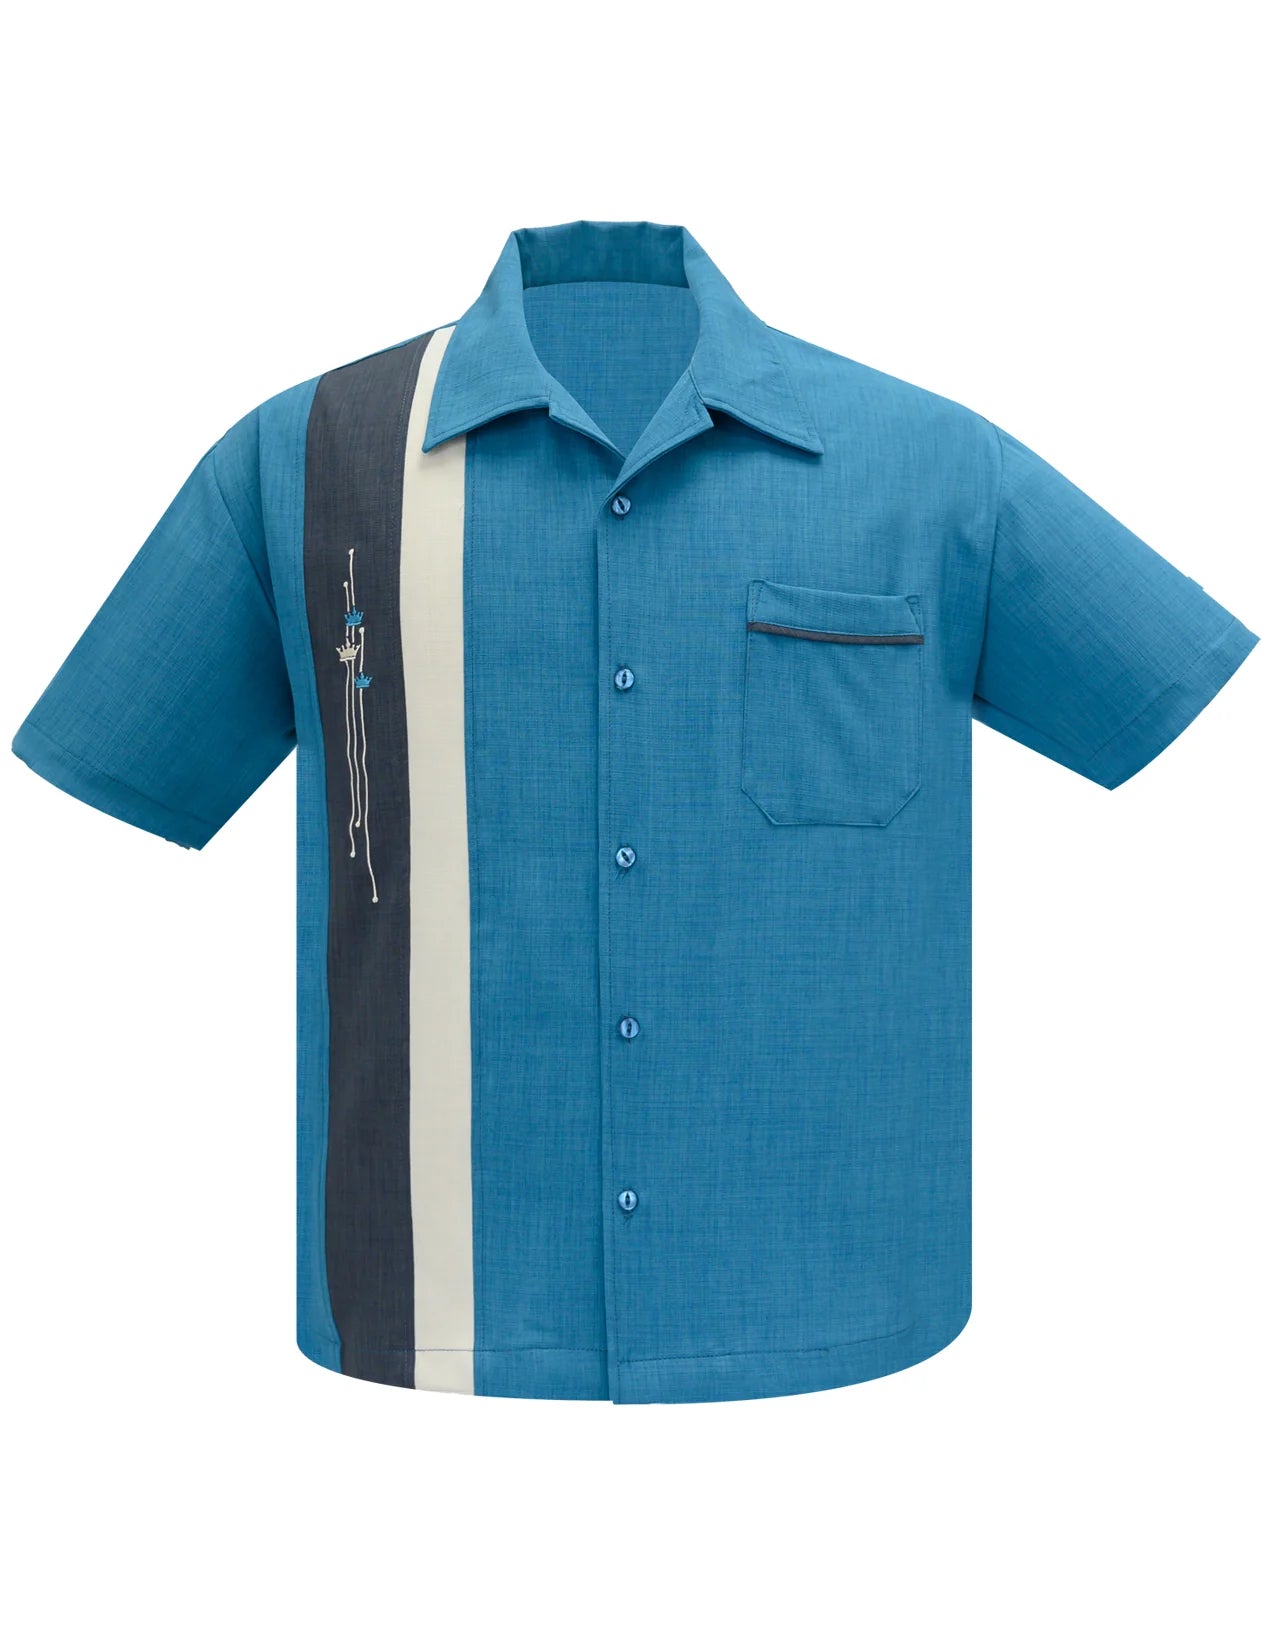 The Arthur Bowling Shirt - Pacific/Charcoal